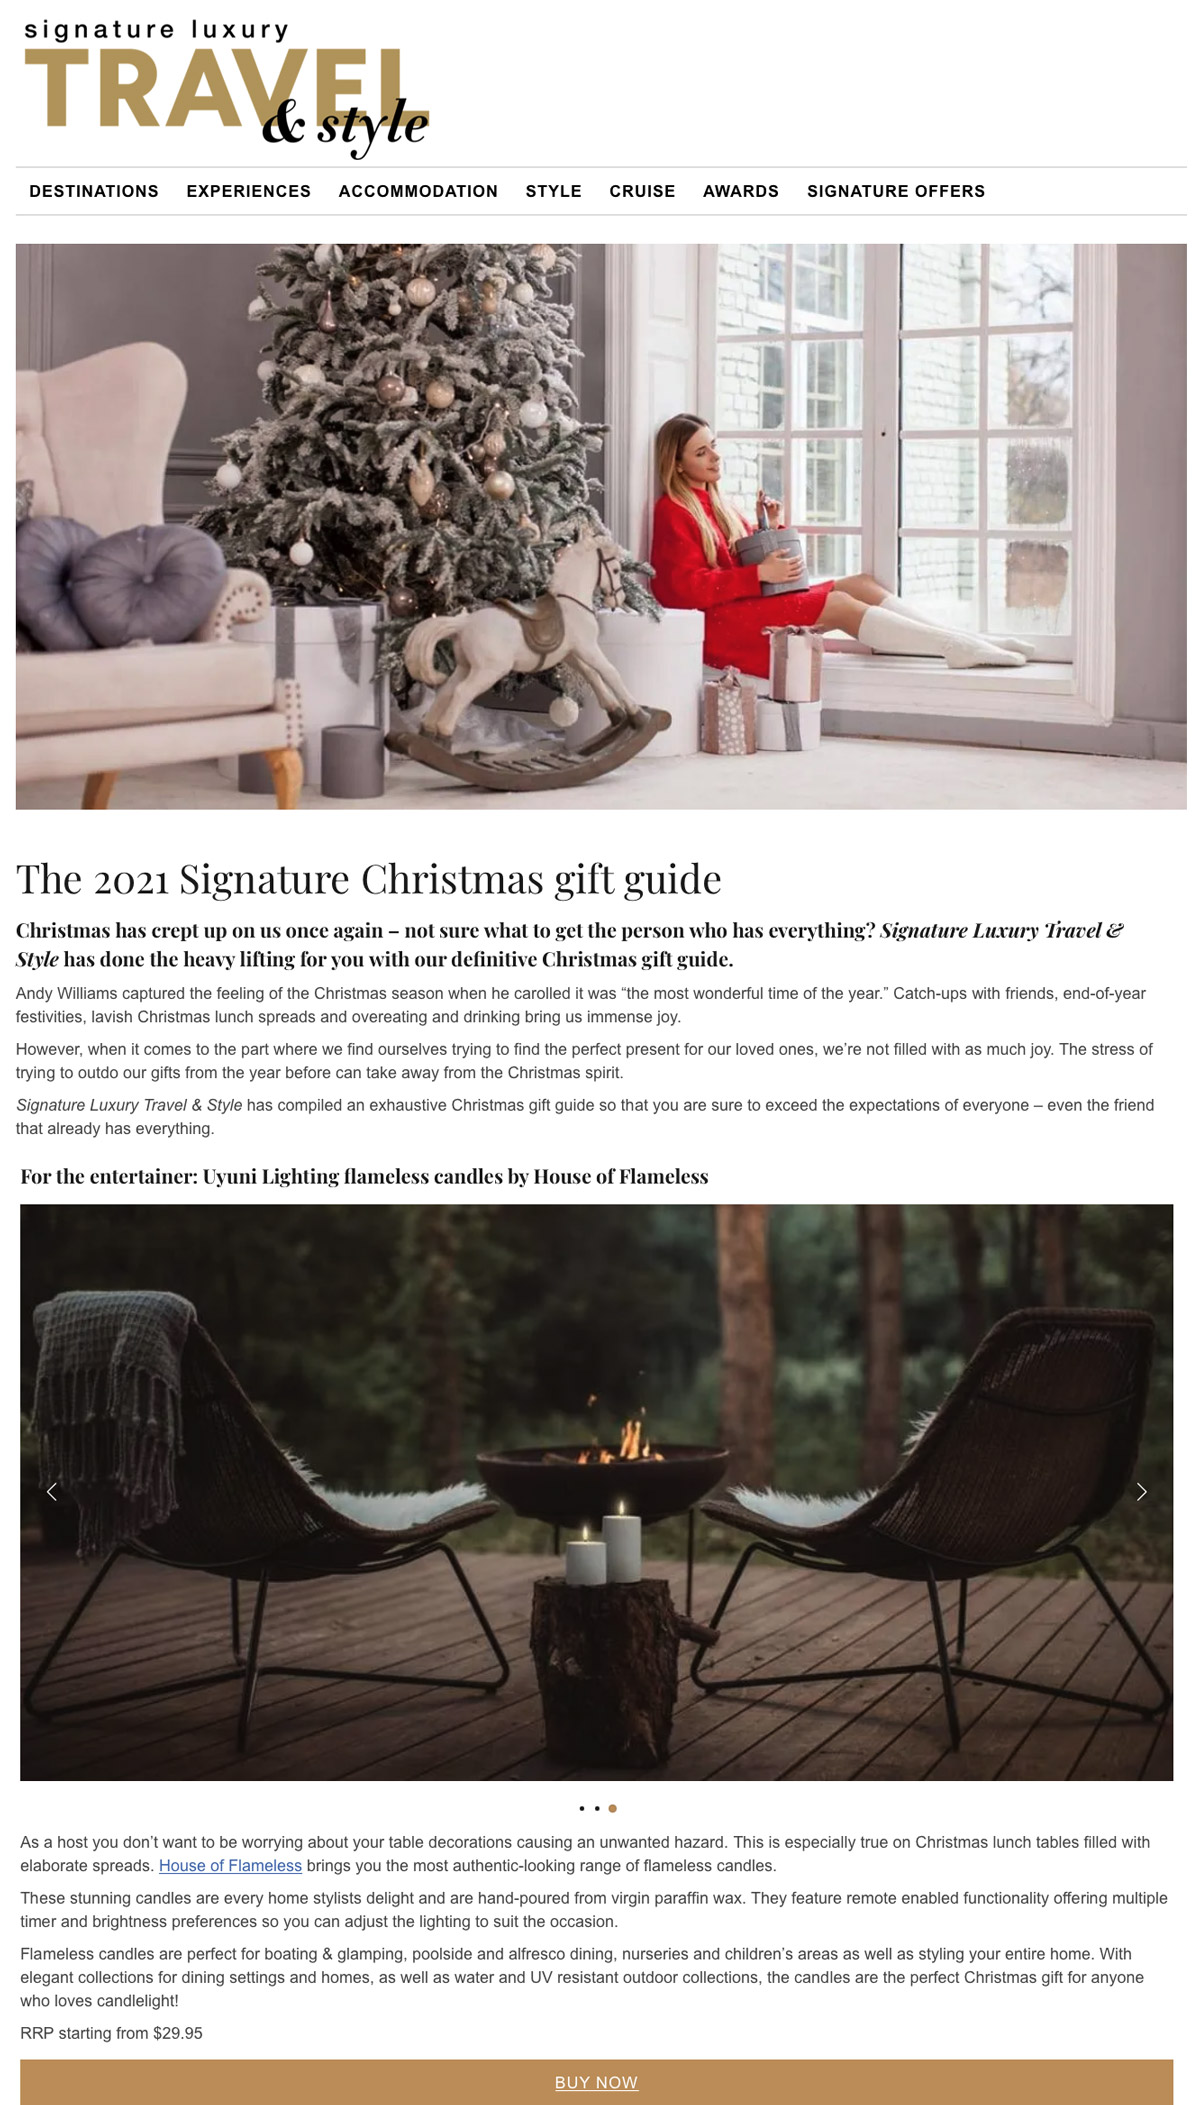 House Of Flameless Uyuni Lighting Luxury Travel Christmas Gift Guide